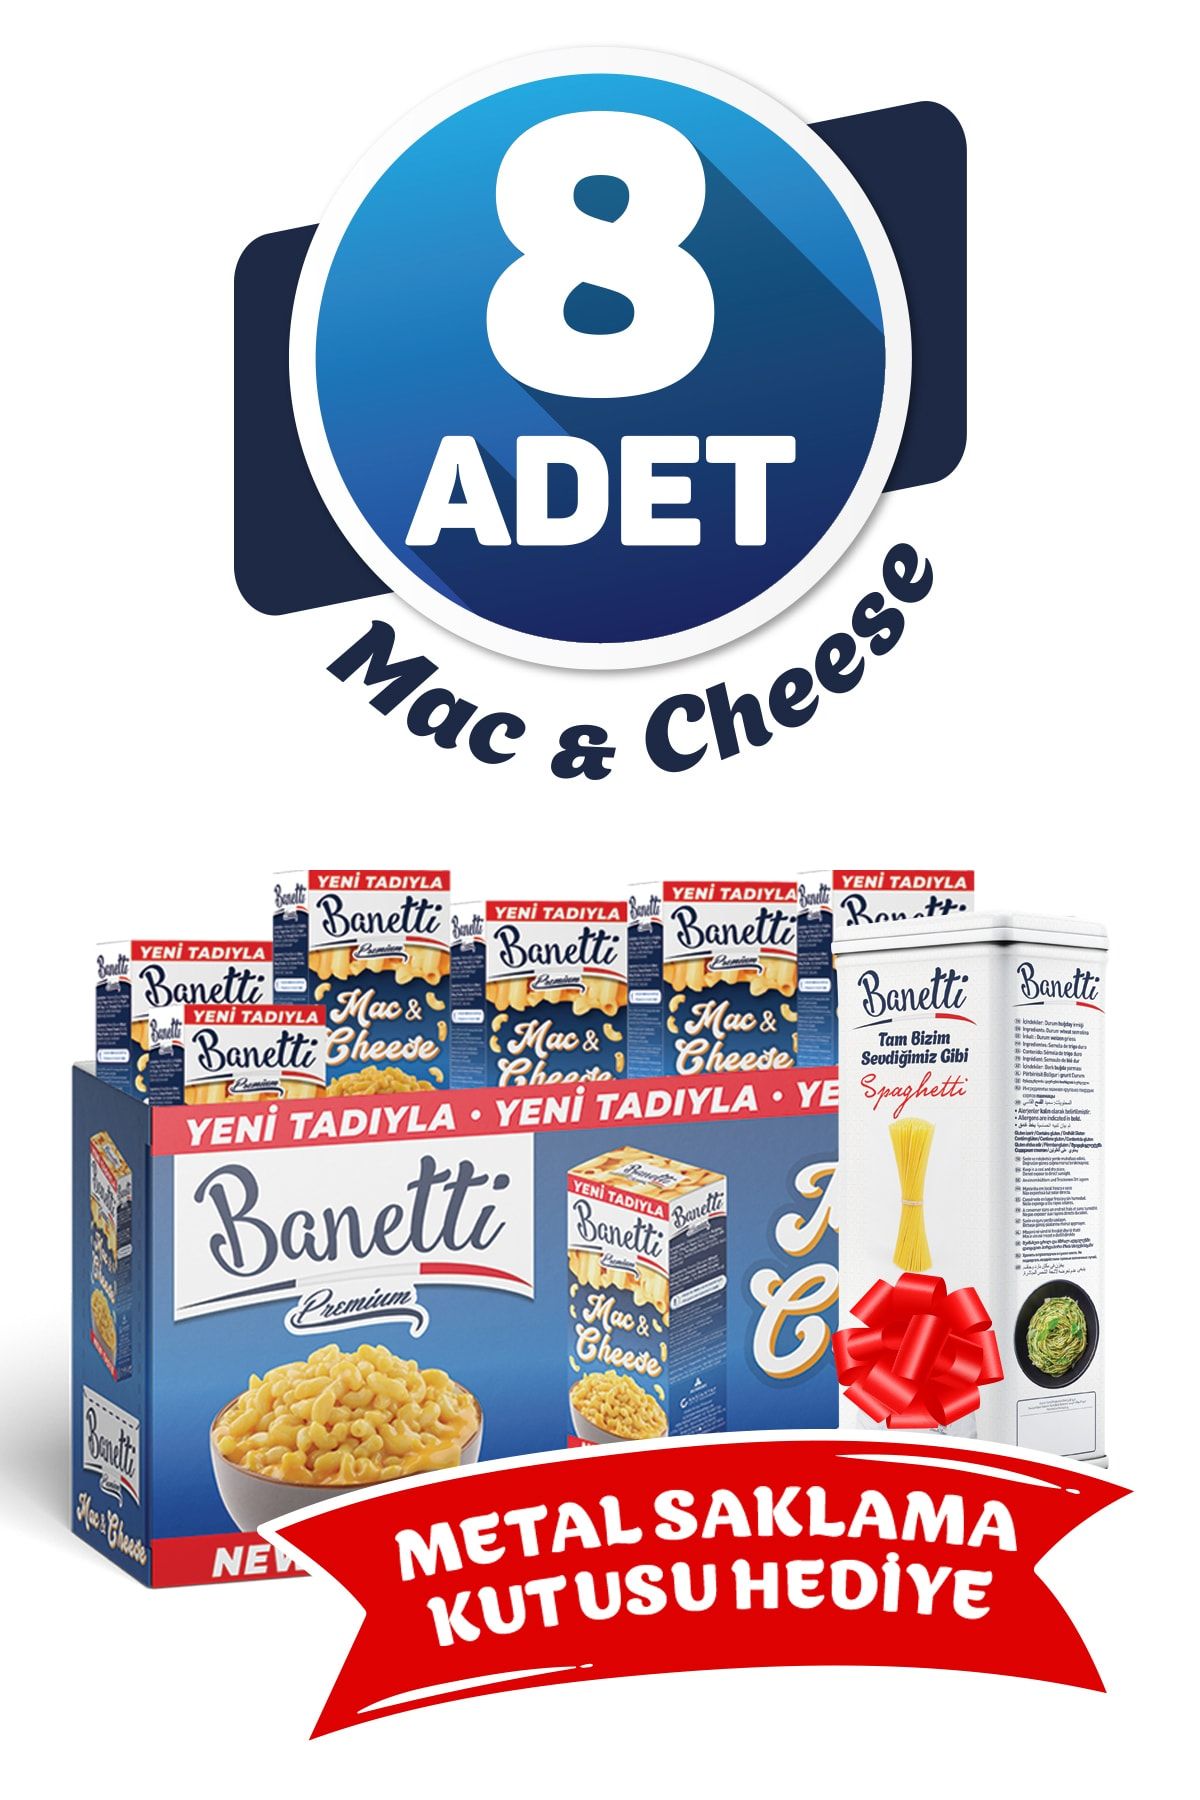 BANETTİ Macaroni & Cheese 8 Adet (MAC AND CHEESE)